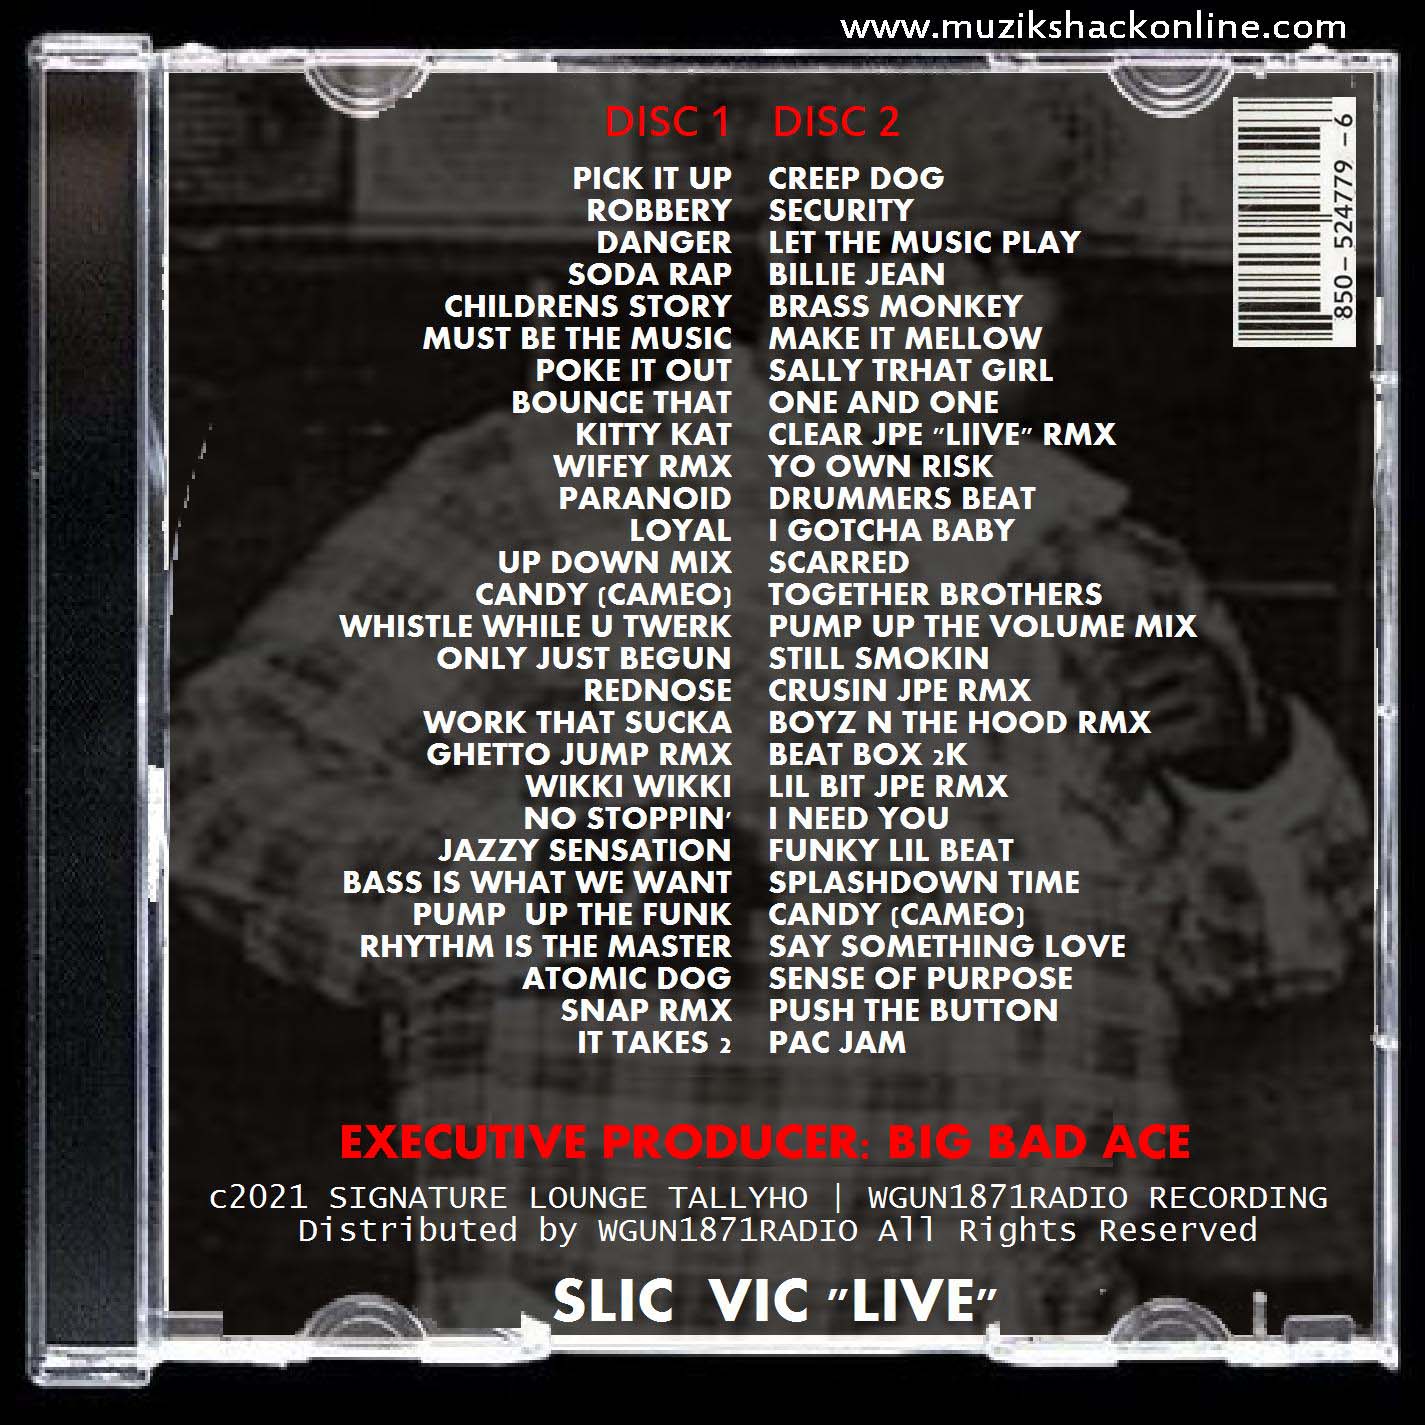 SLIC VIC - SIGNATURE LOUNGE TALLYHO (LIVE SHOW) c2021